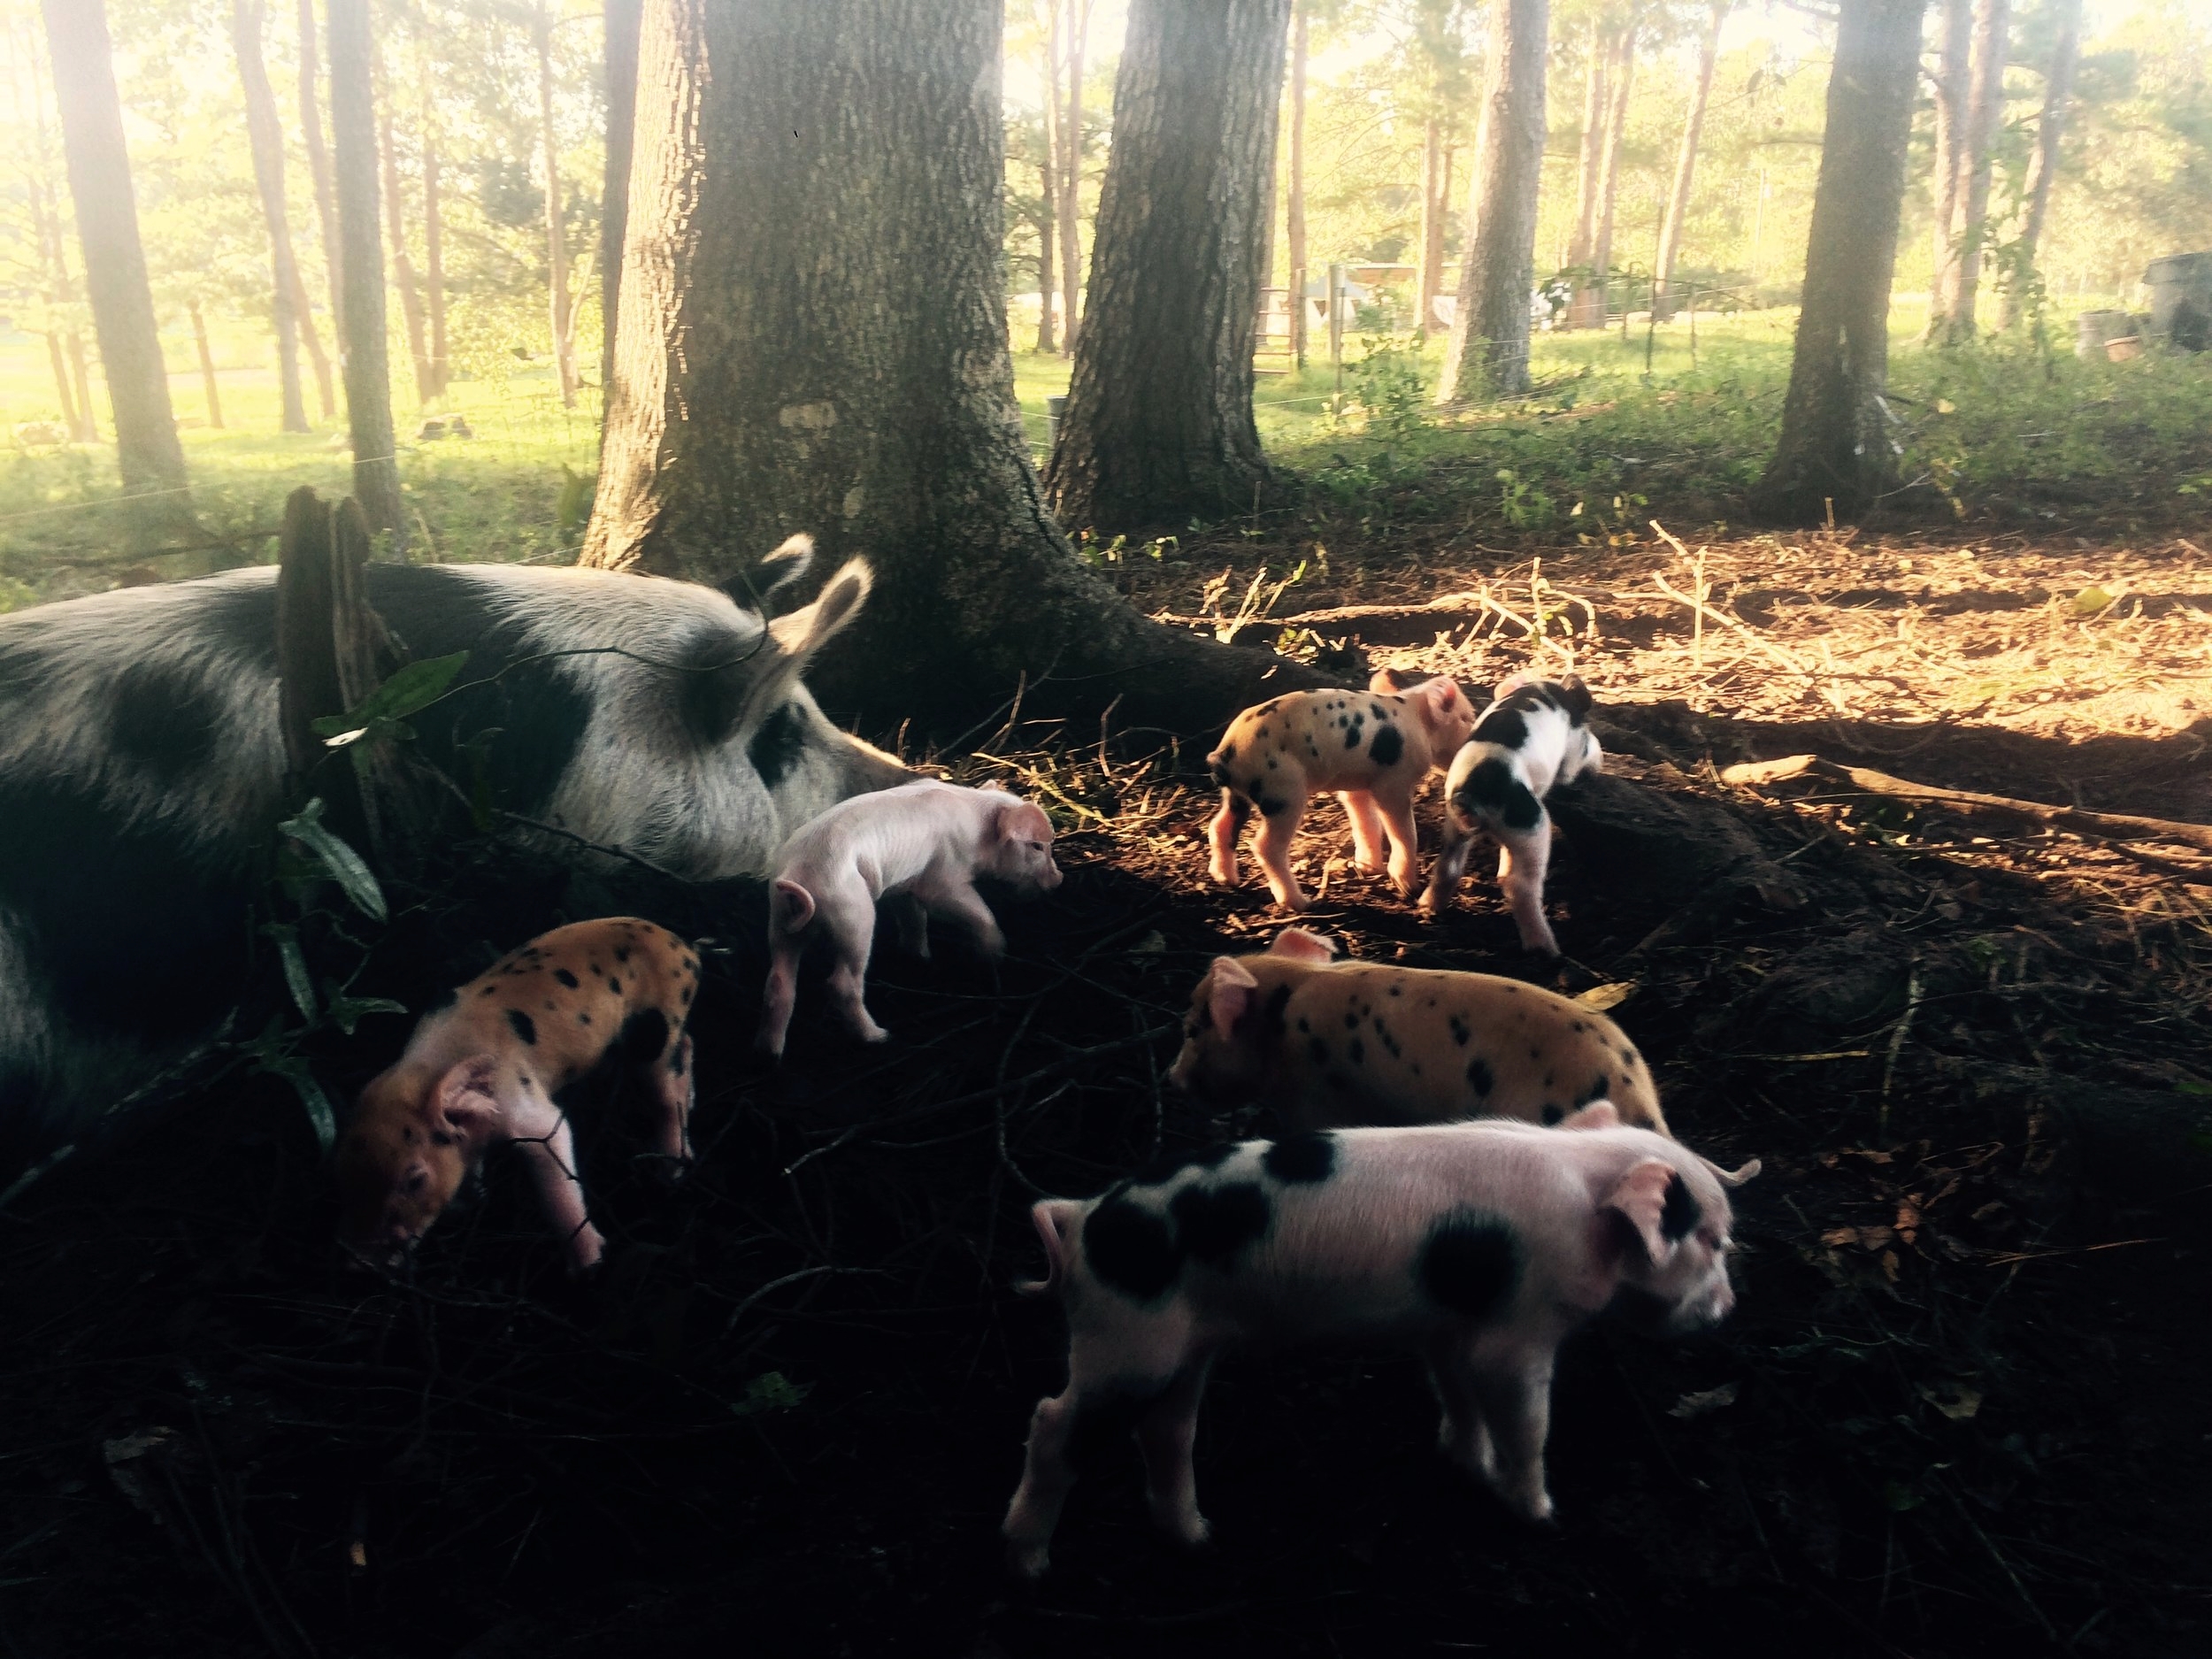  A newborn litter of piglets and their mother. 